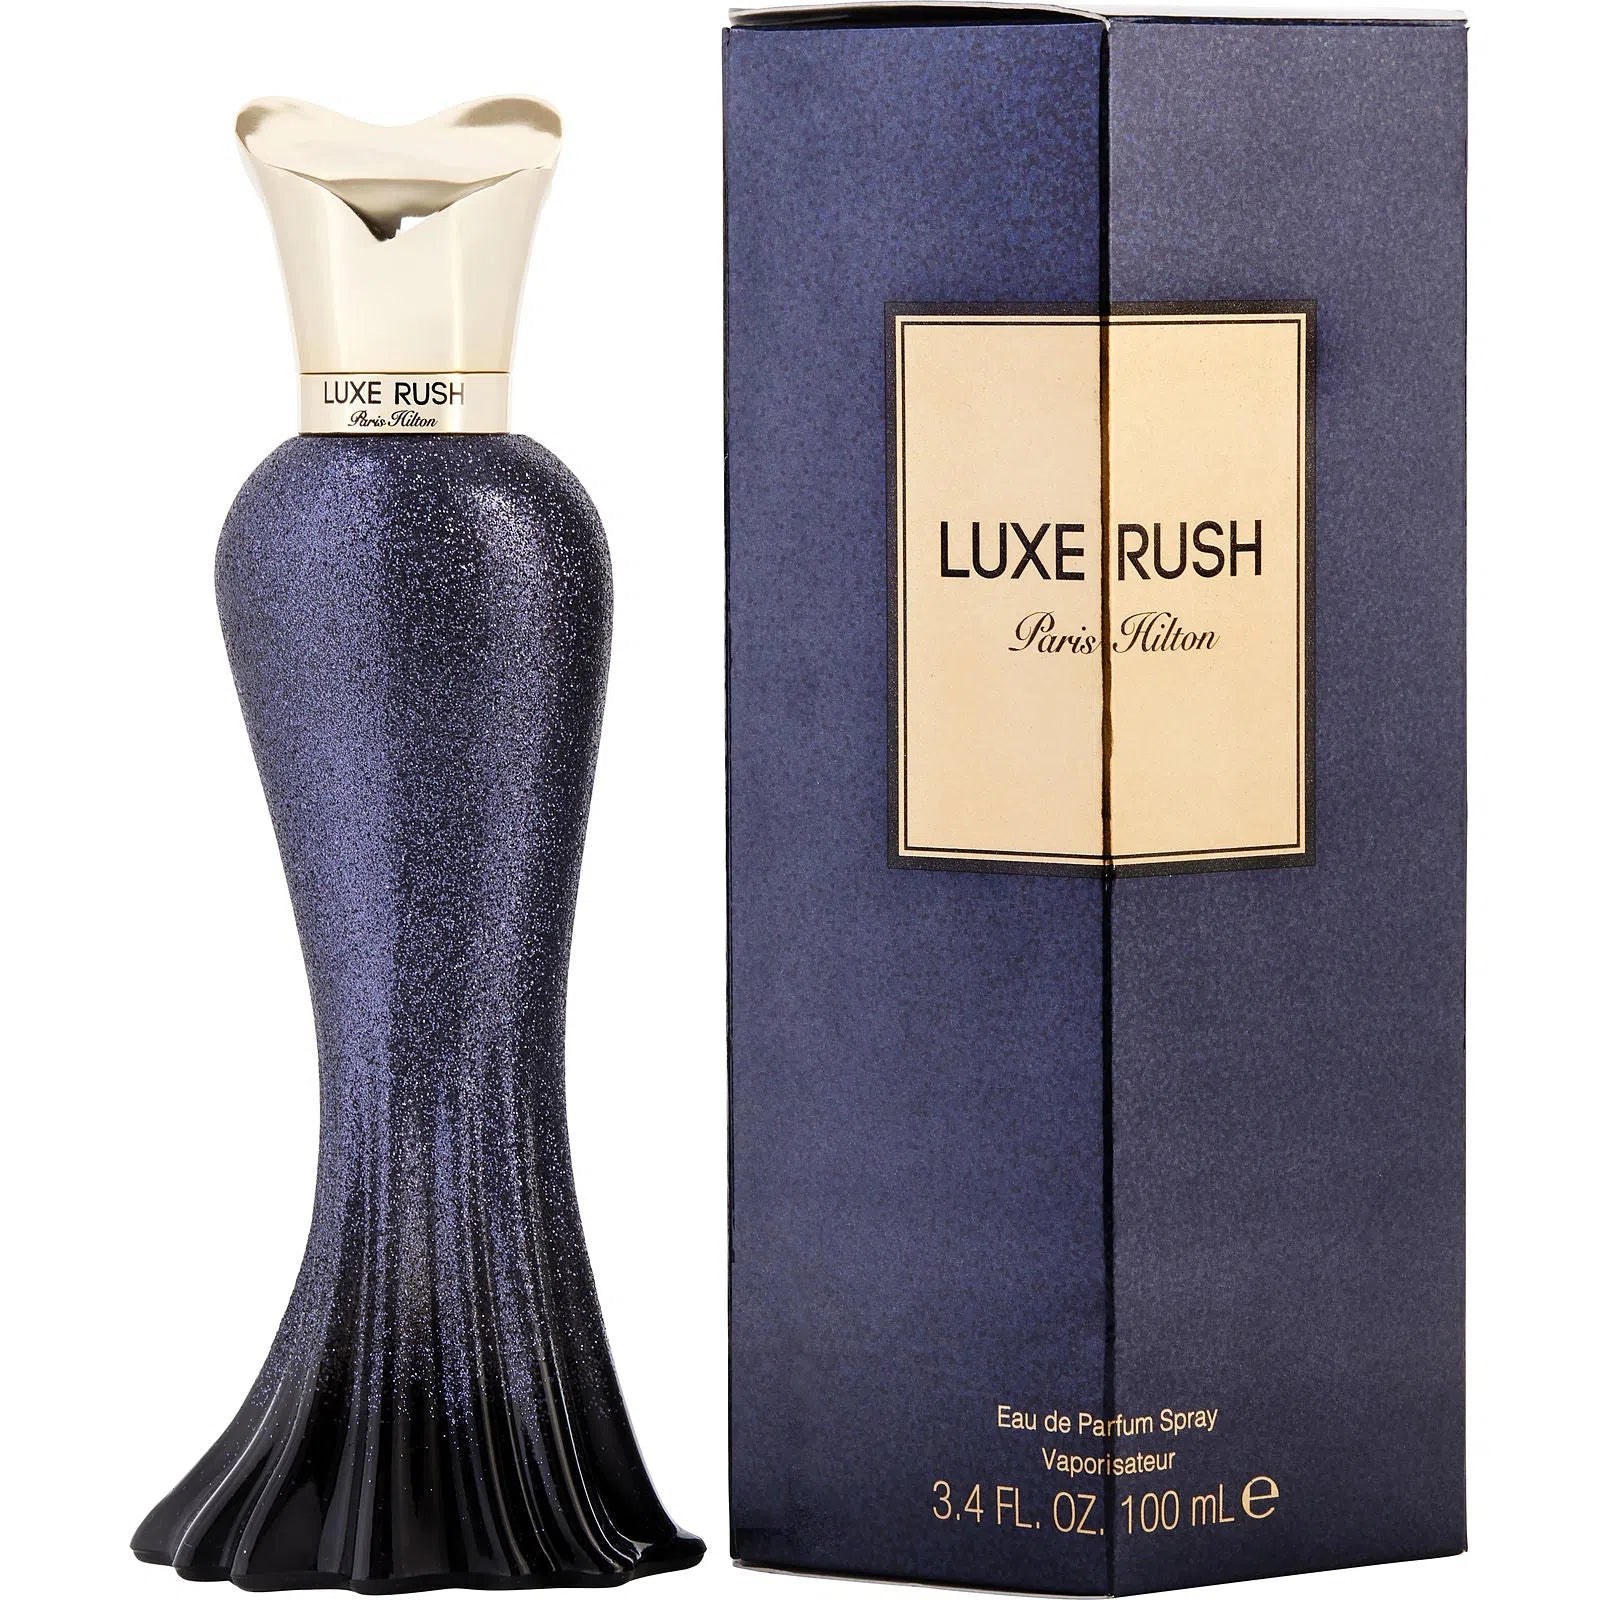 Perfume Paris Hilton Luxe Rush EDP (W) / 100 ml - 608940580554- Prive Perfumes Honduras